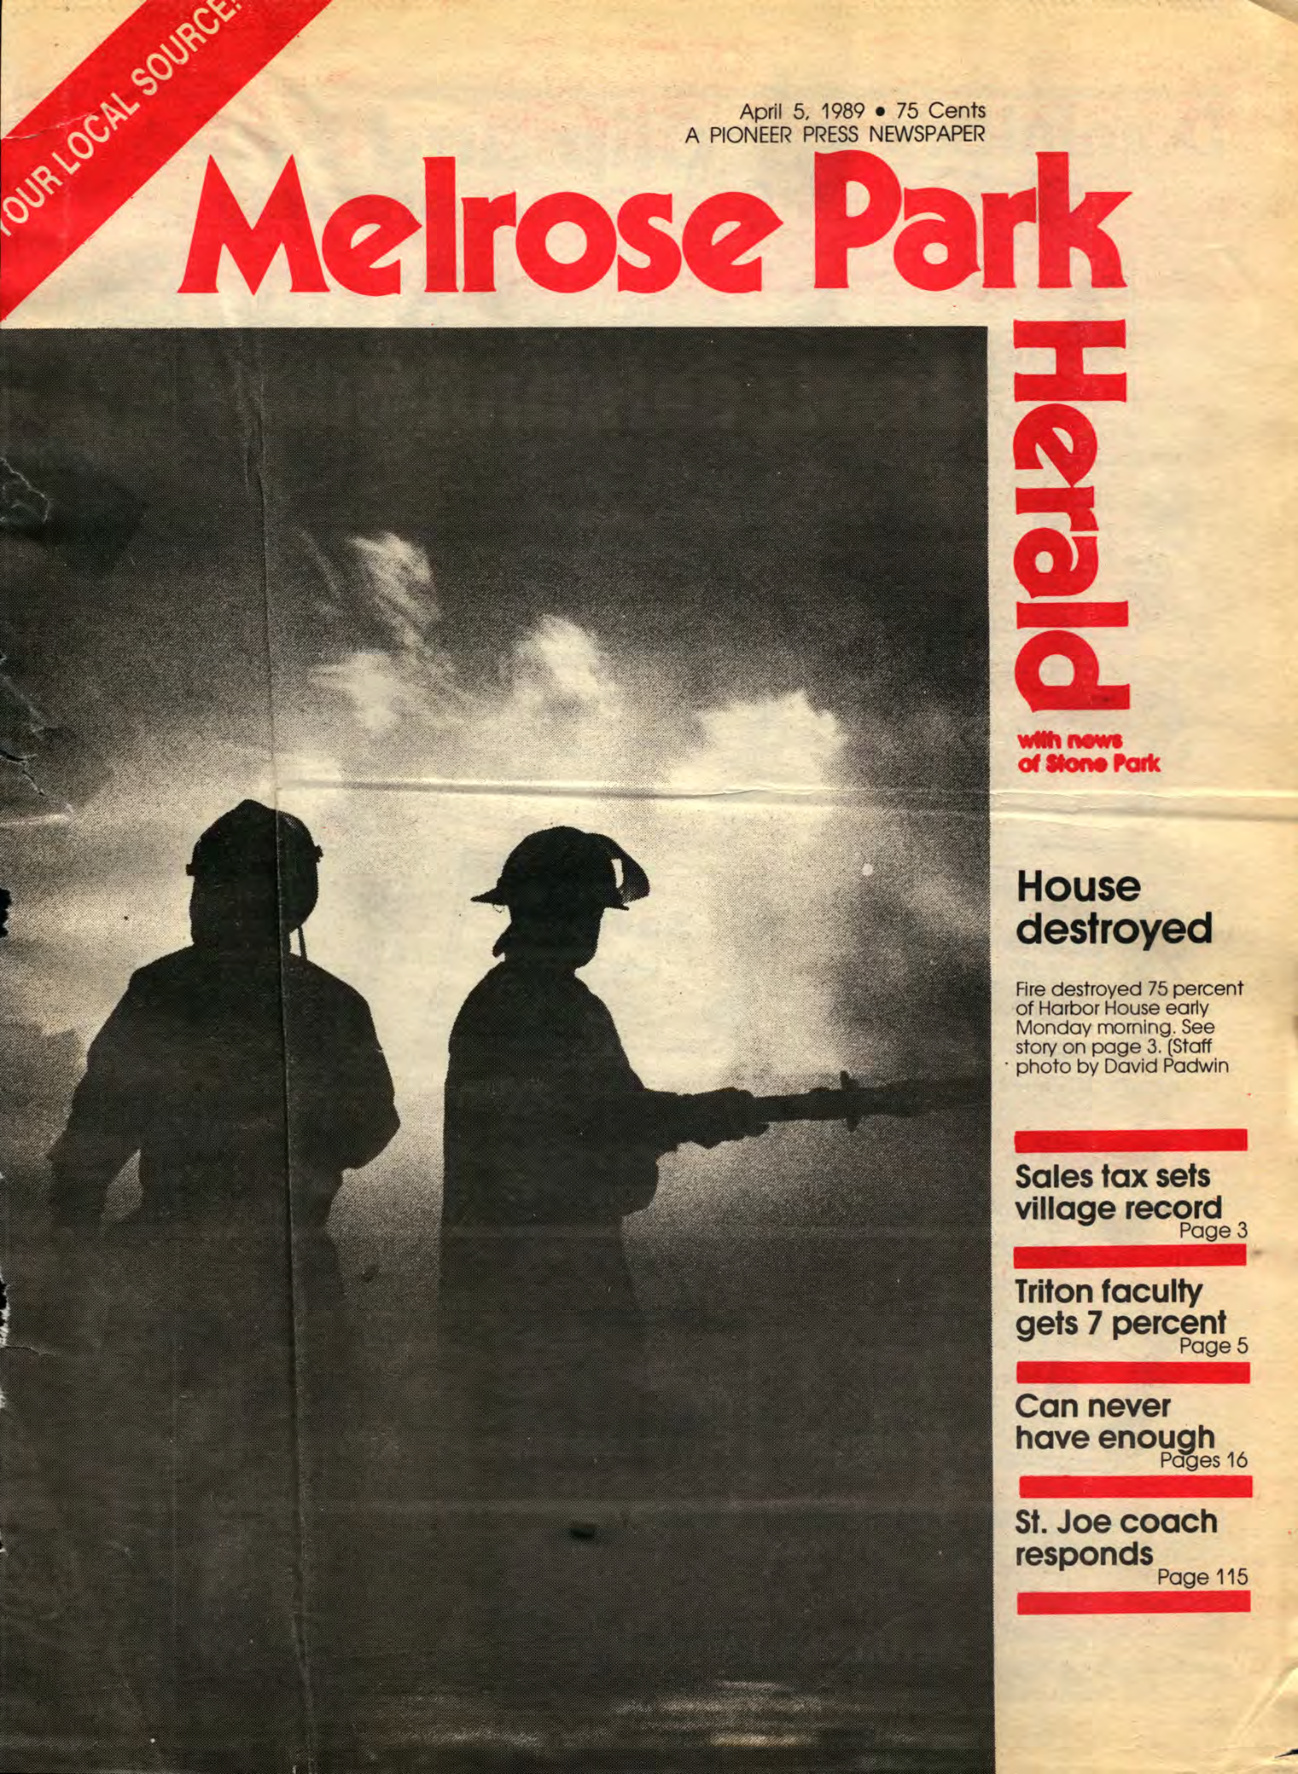 The Herald – 19890405